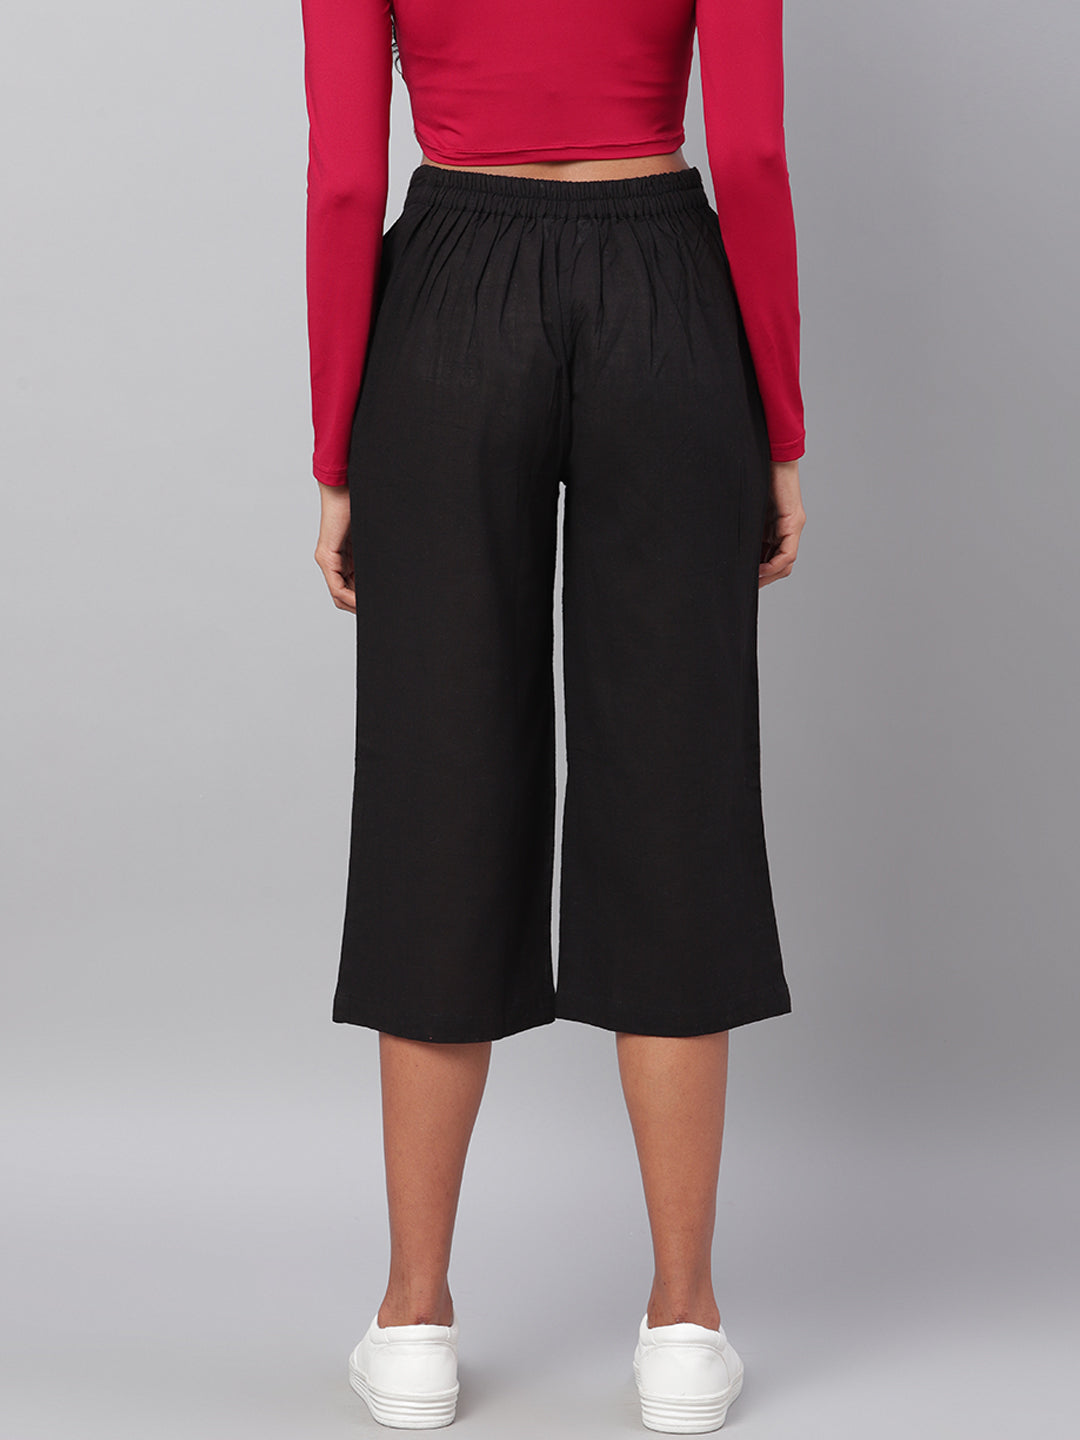 Myshka Women's Black Solid Cotton Trouser